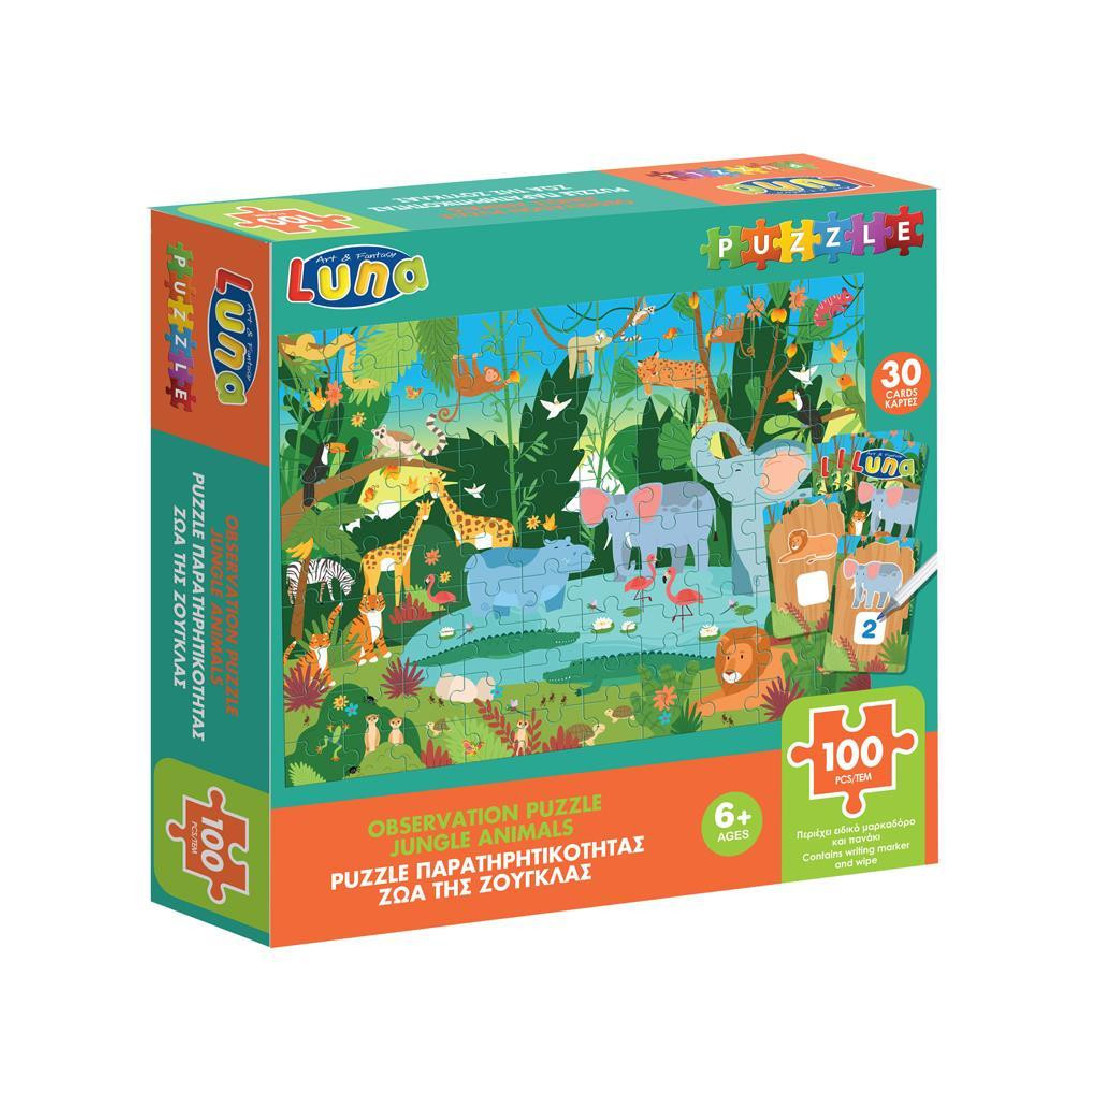 Puzzle παρατηρητικότητας 100τμχ. Ζώα της Ζούγκλας 000621804 Luna Toys